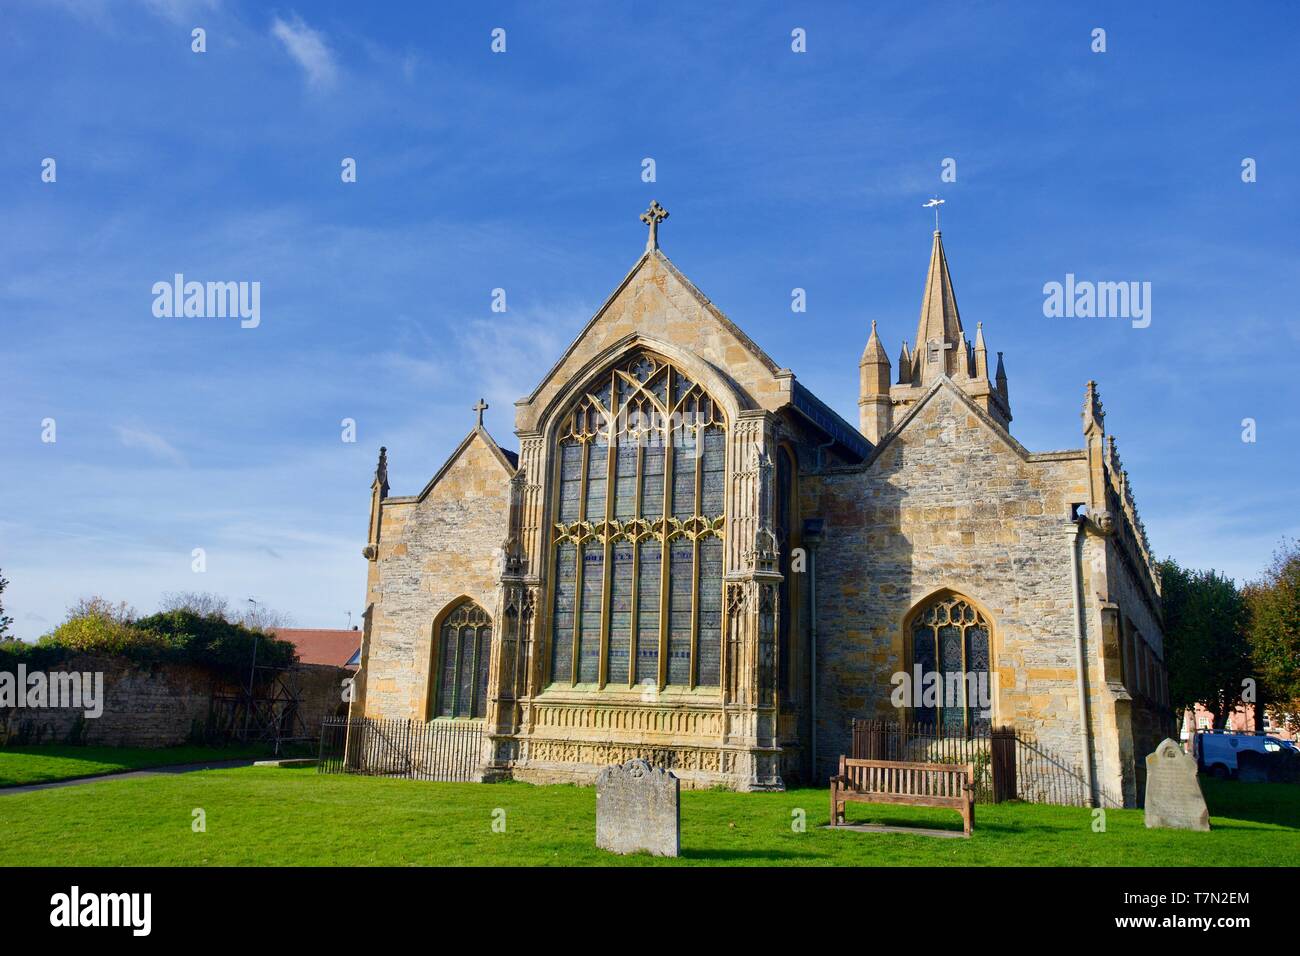 St Lawrence's Church, Evesham, Worcestershire England Stock Photo